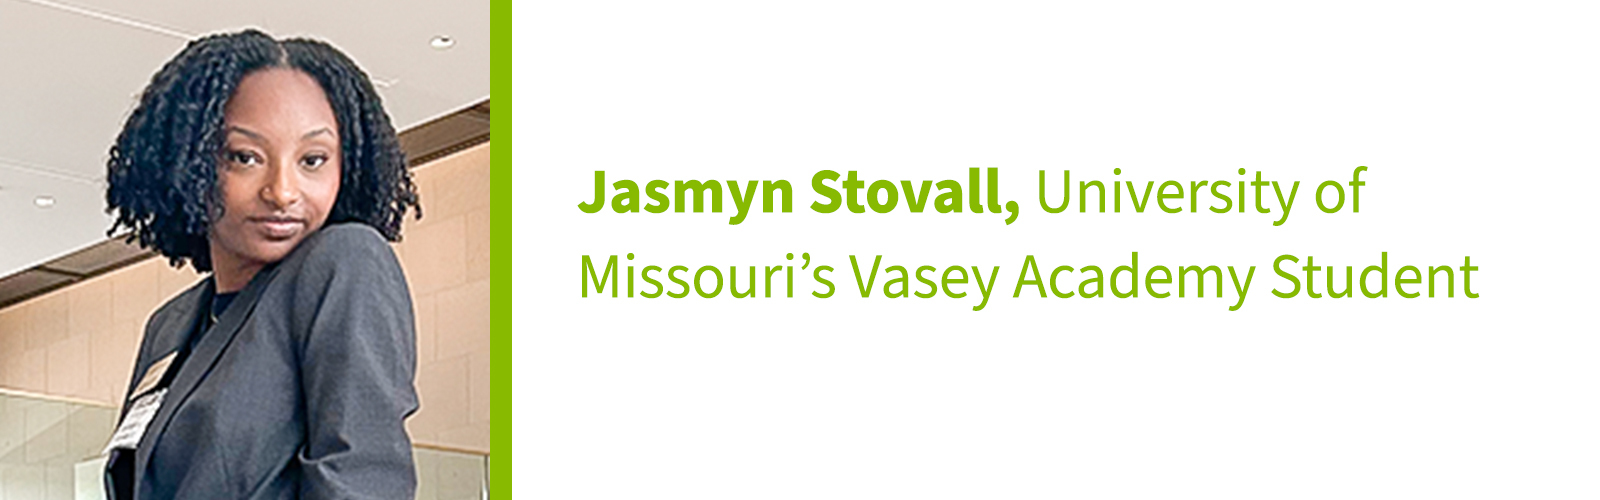 Jasmyn Stovall, University of Missouri’s Vasey Academy Student